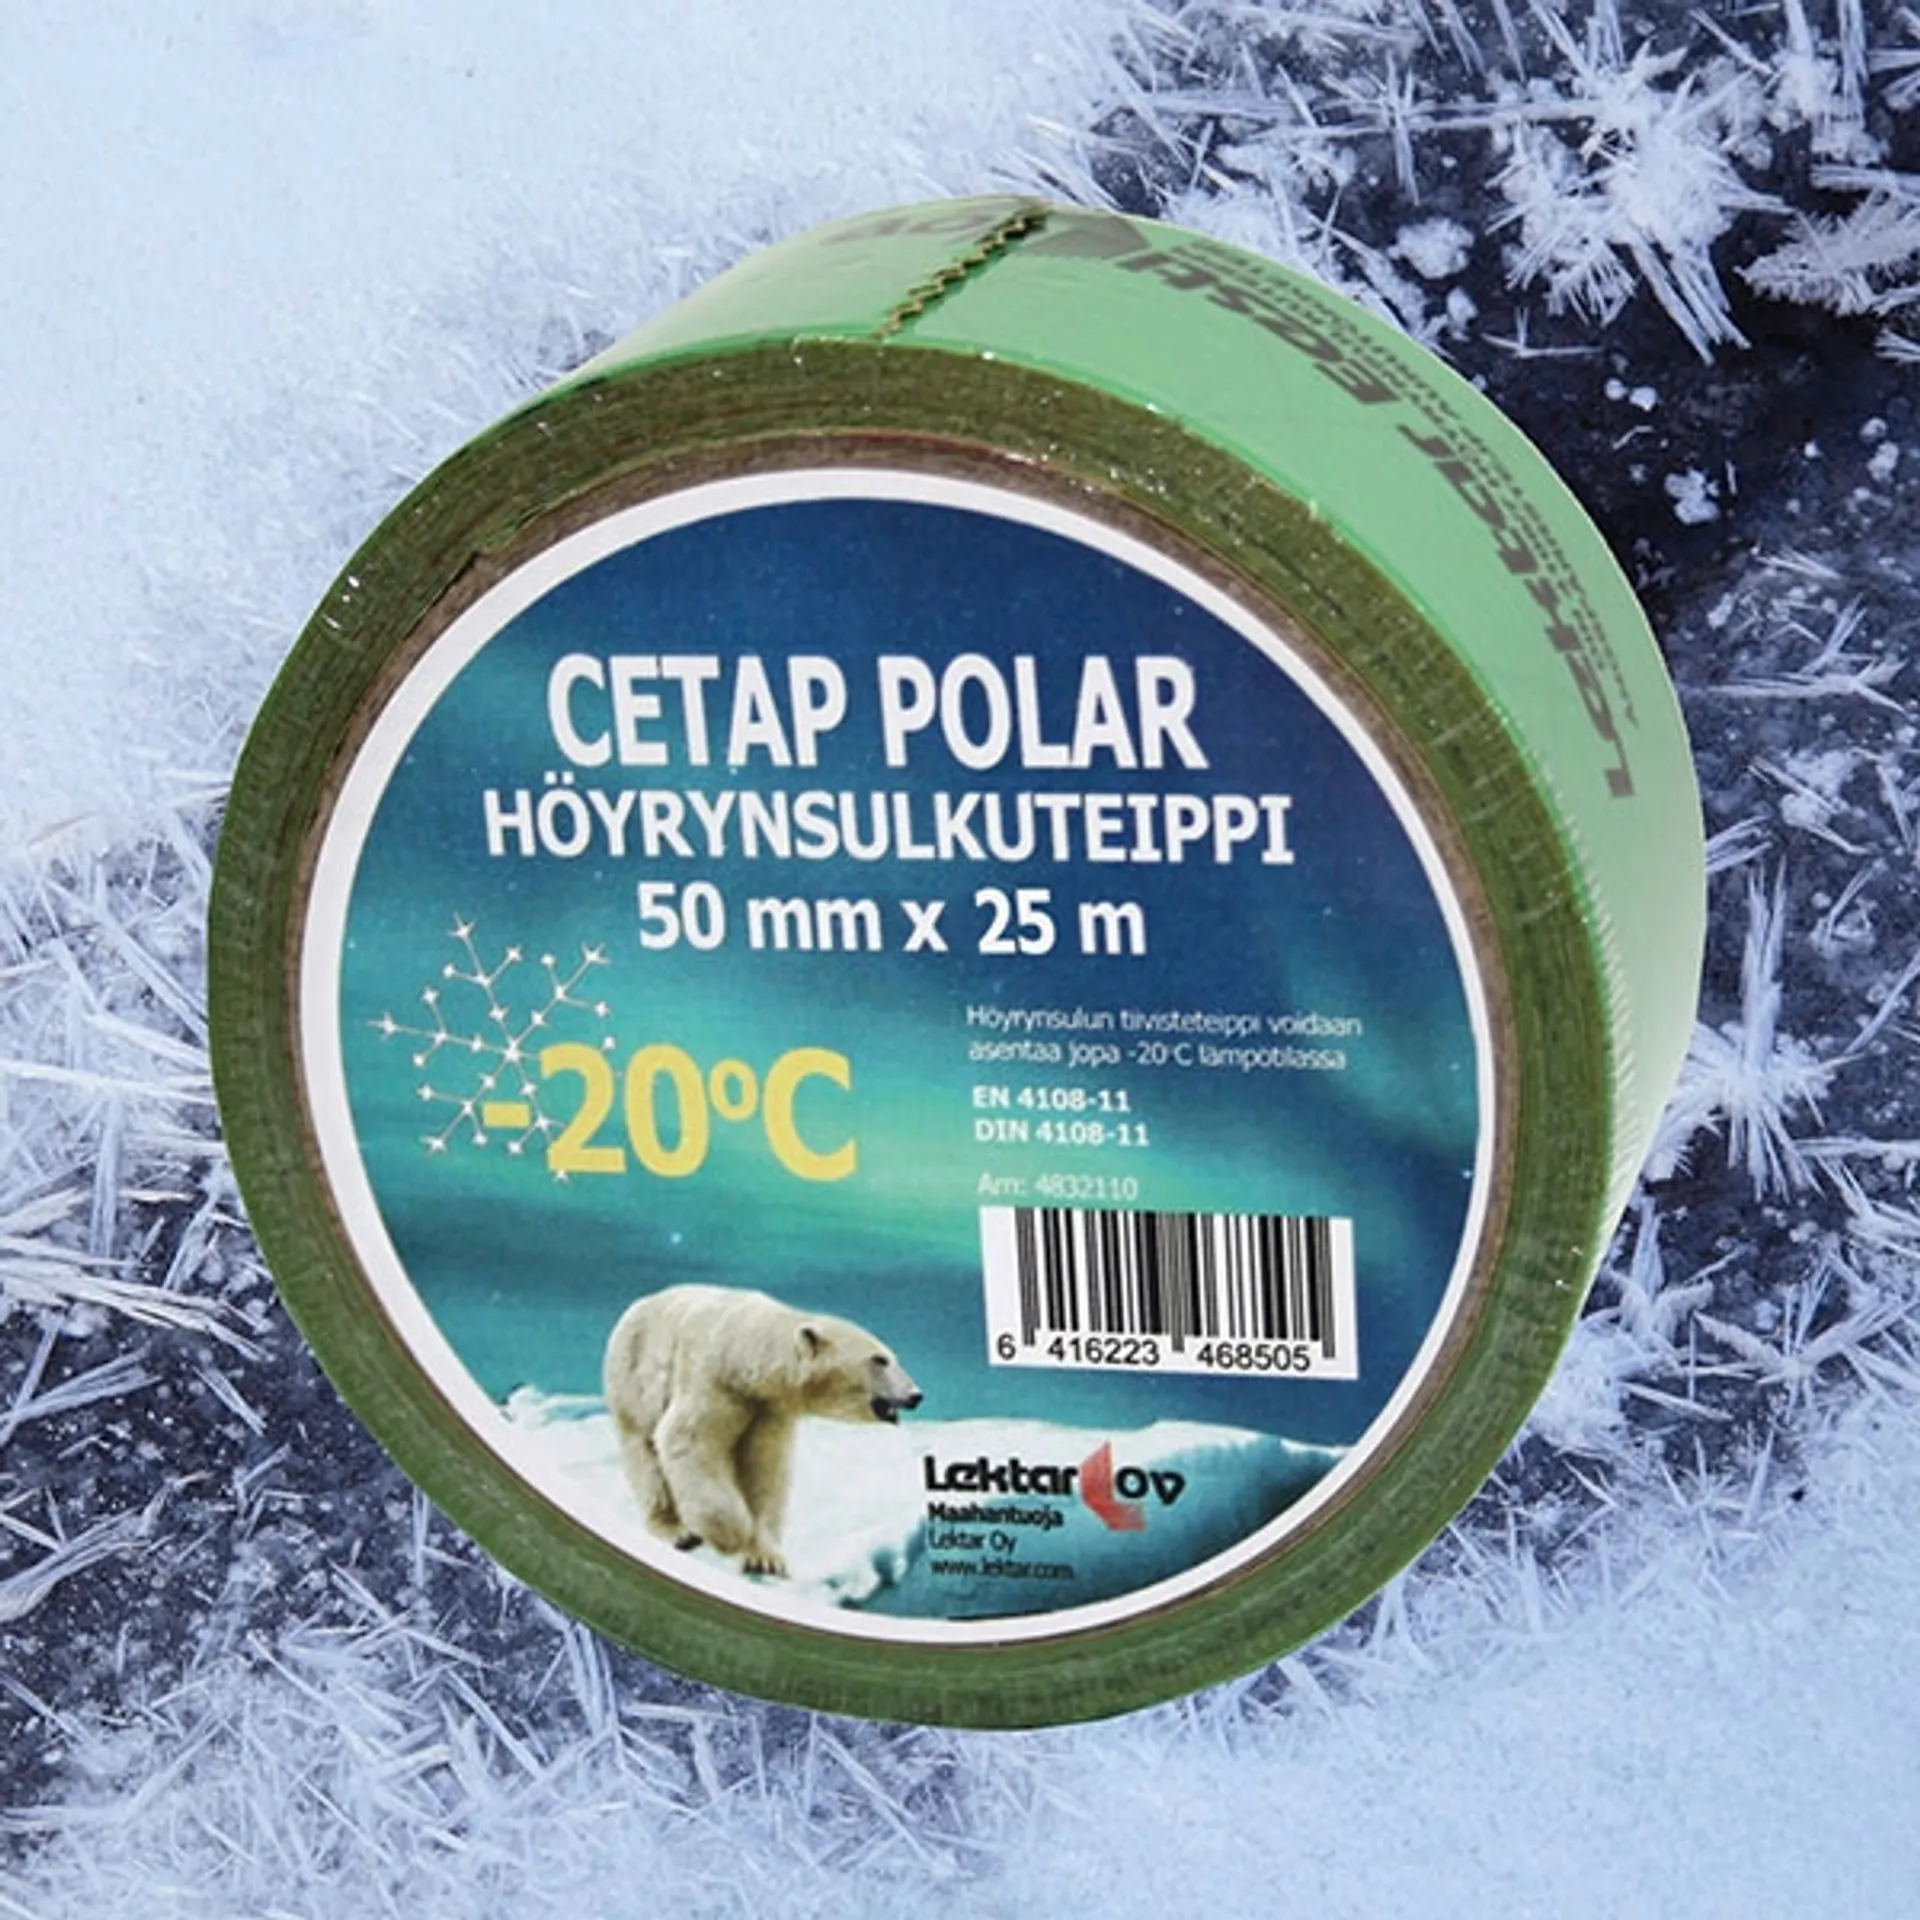 Cetap polar höyrynsulkuteippi -20c 50 mm x 25 m